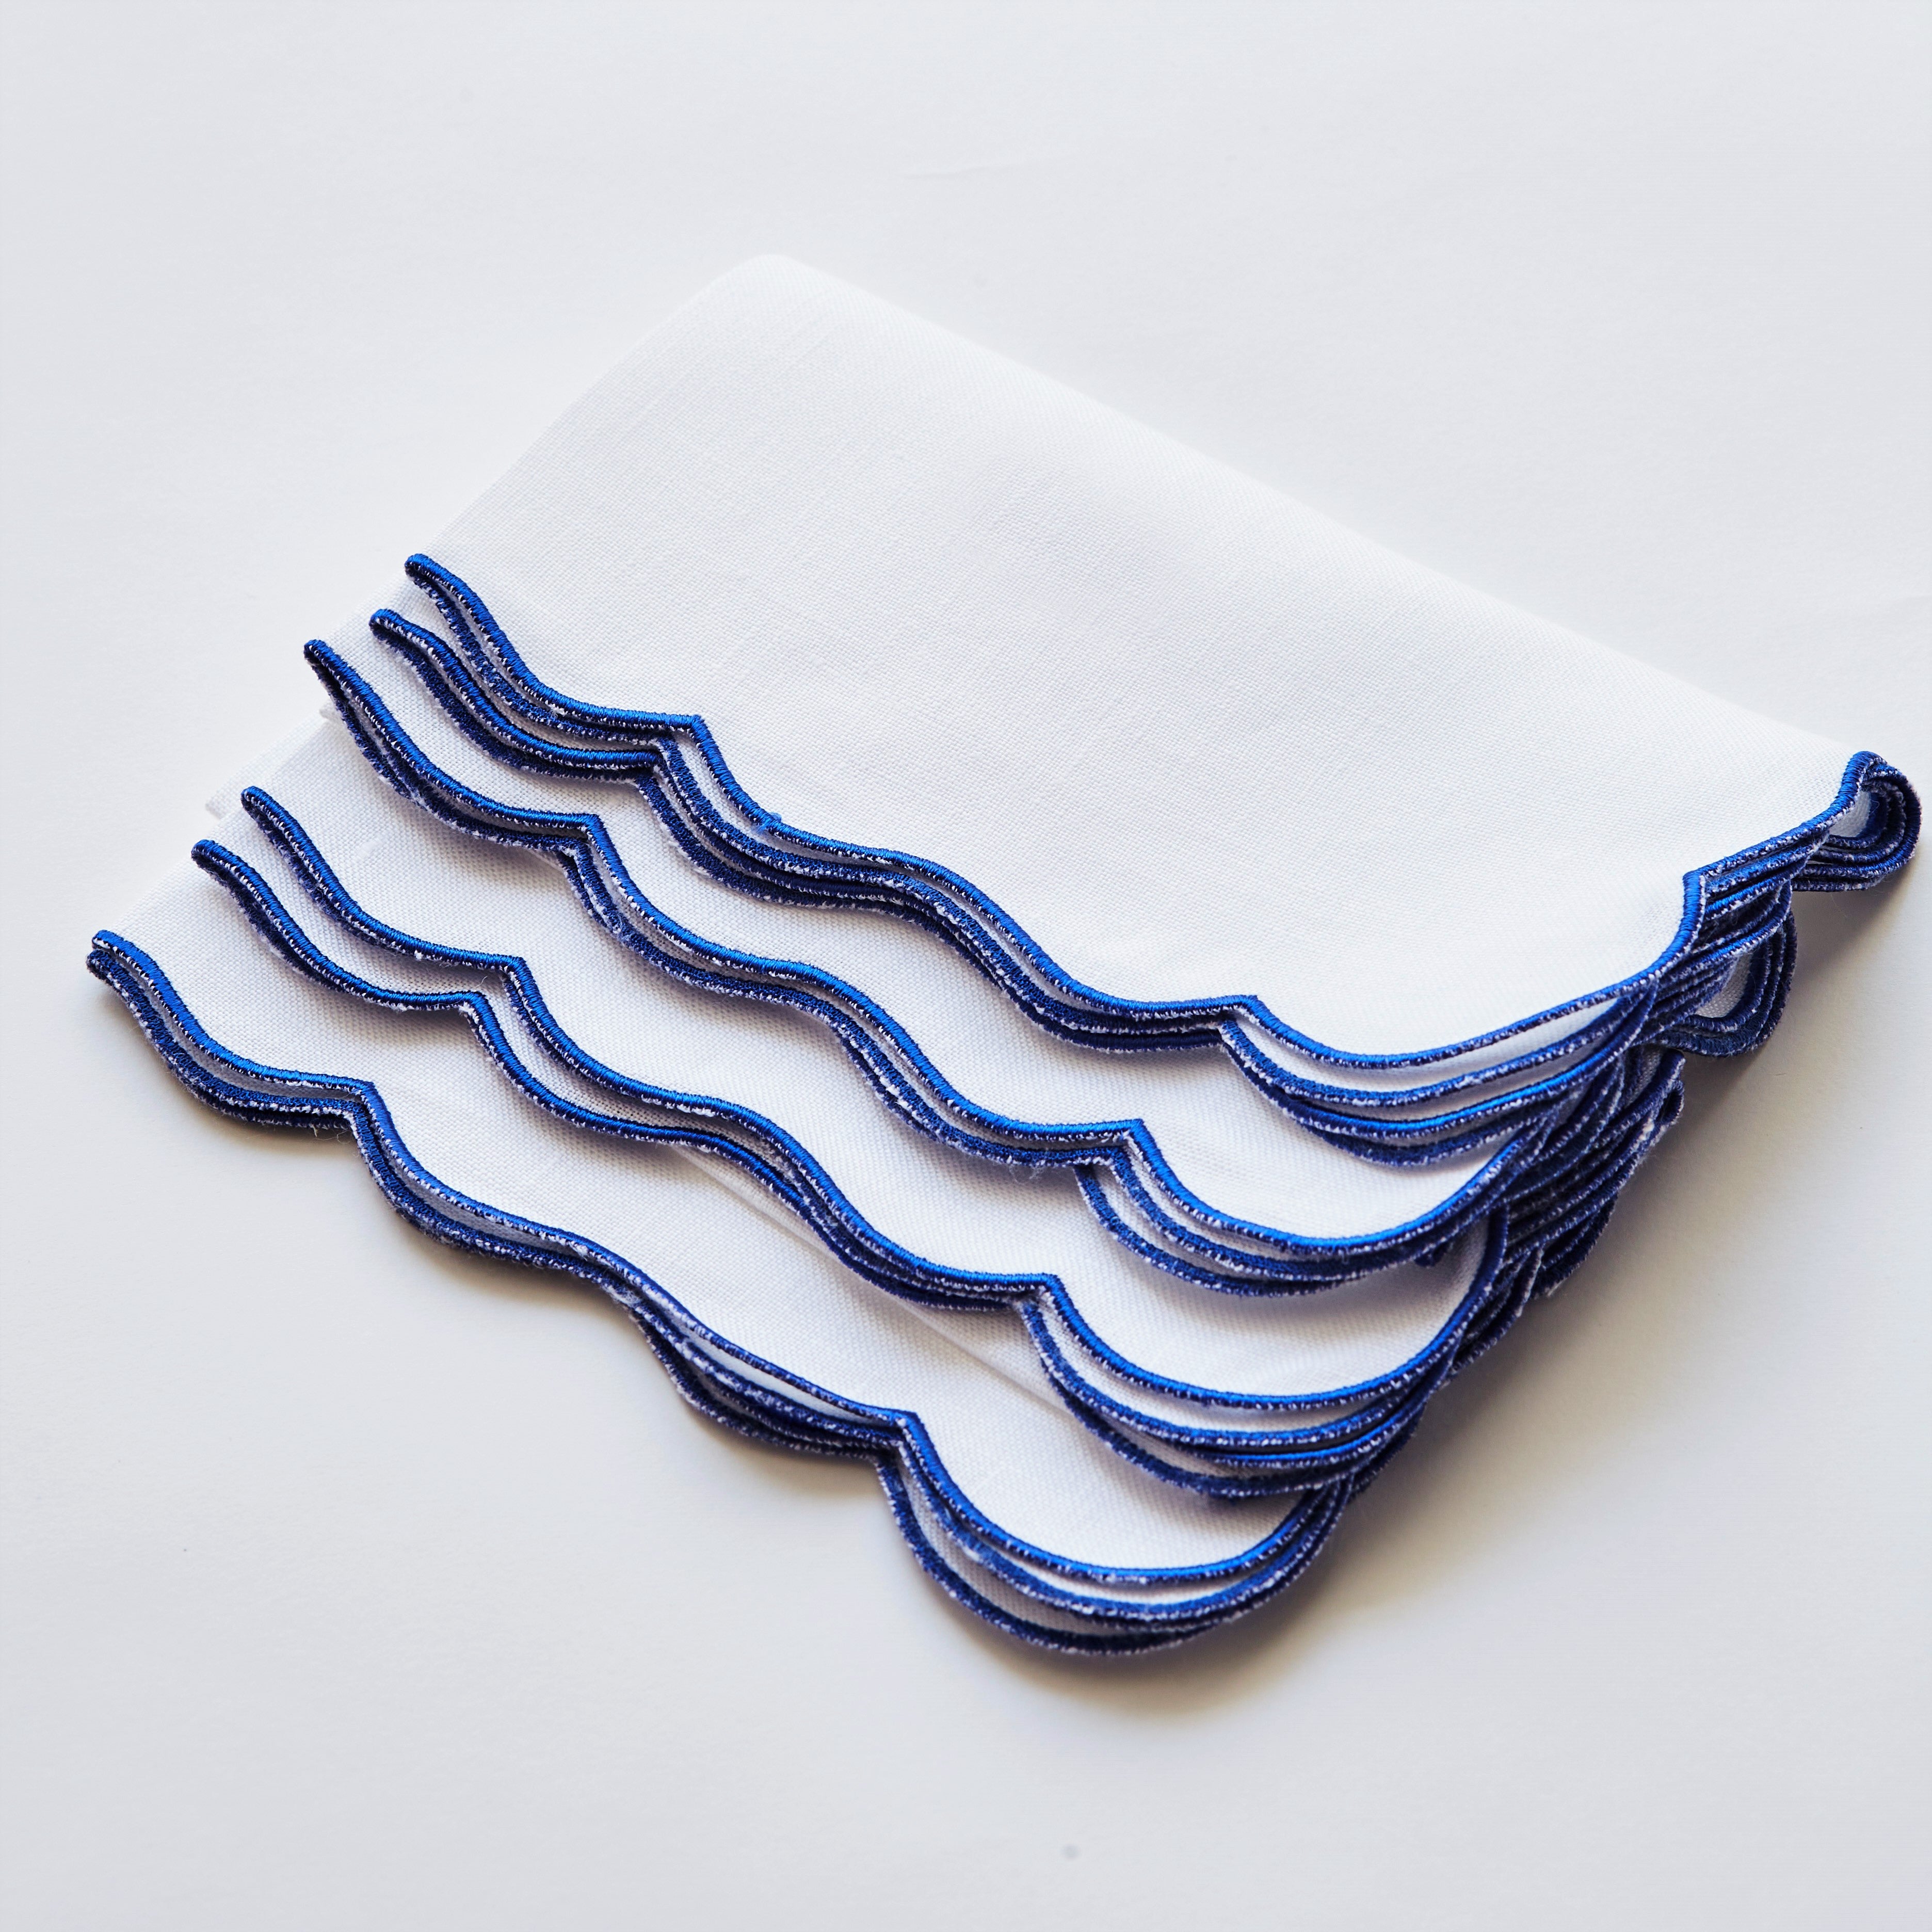 Embroidered Bright Blue Scallop Napkin (set of 4)